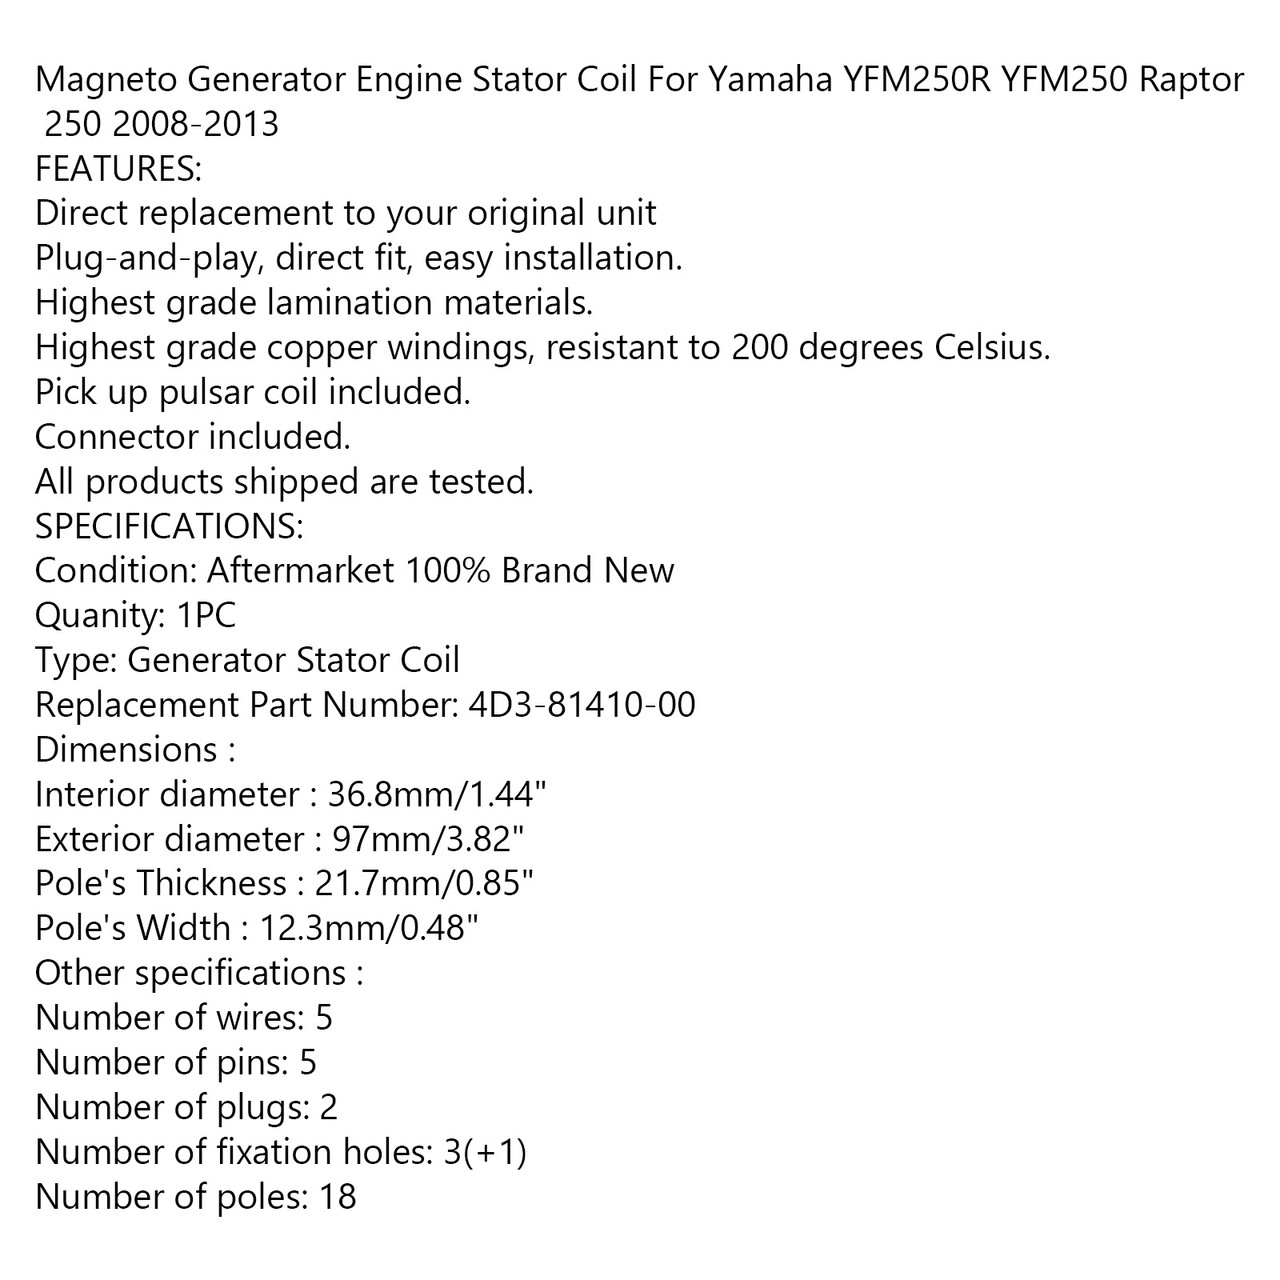 Magneto Generator Engine Stator Coil Fit for Yamaha YFM250R Raptor 250 08-13